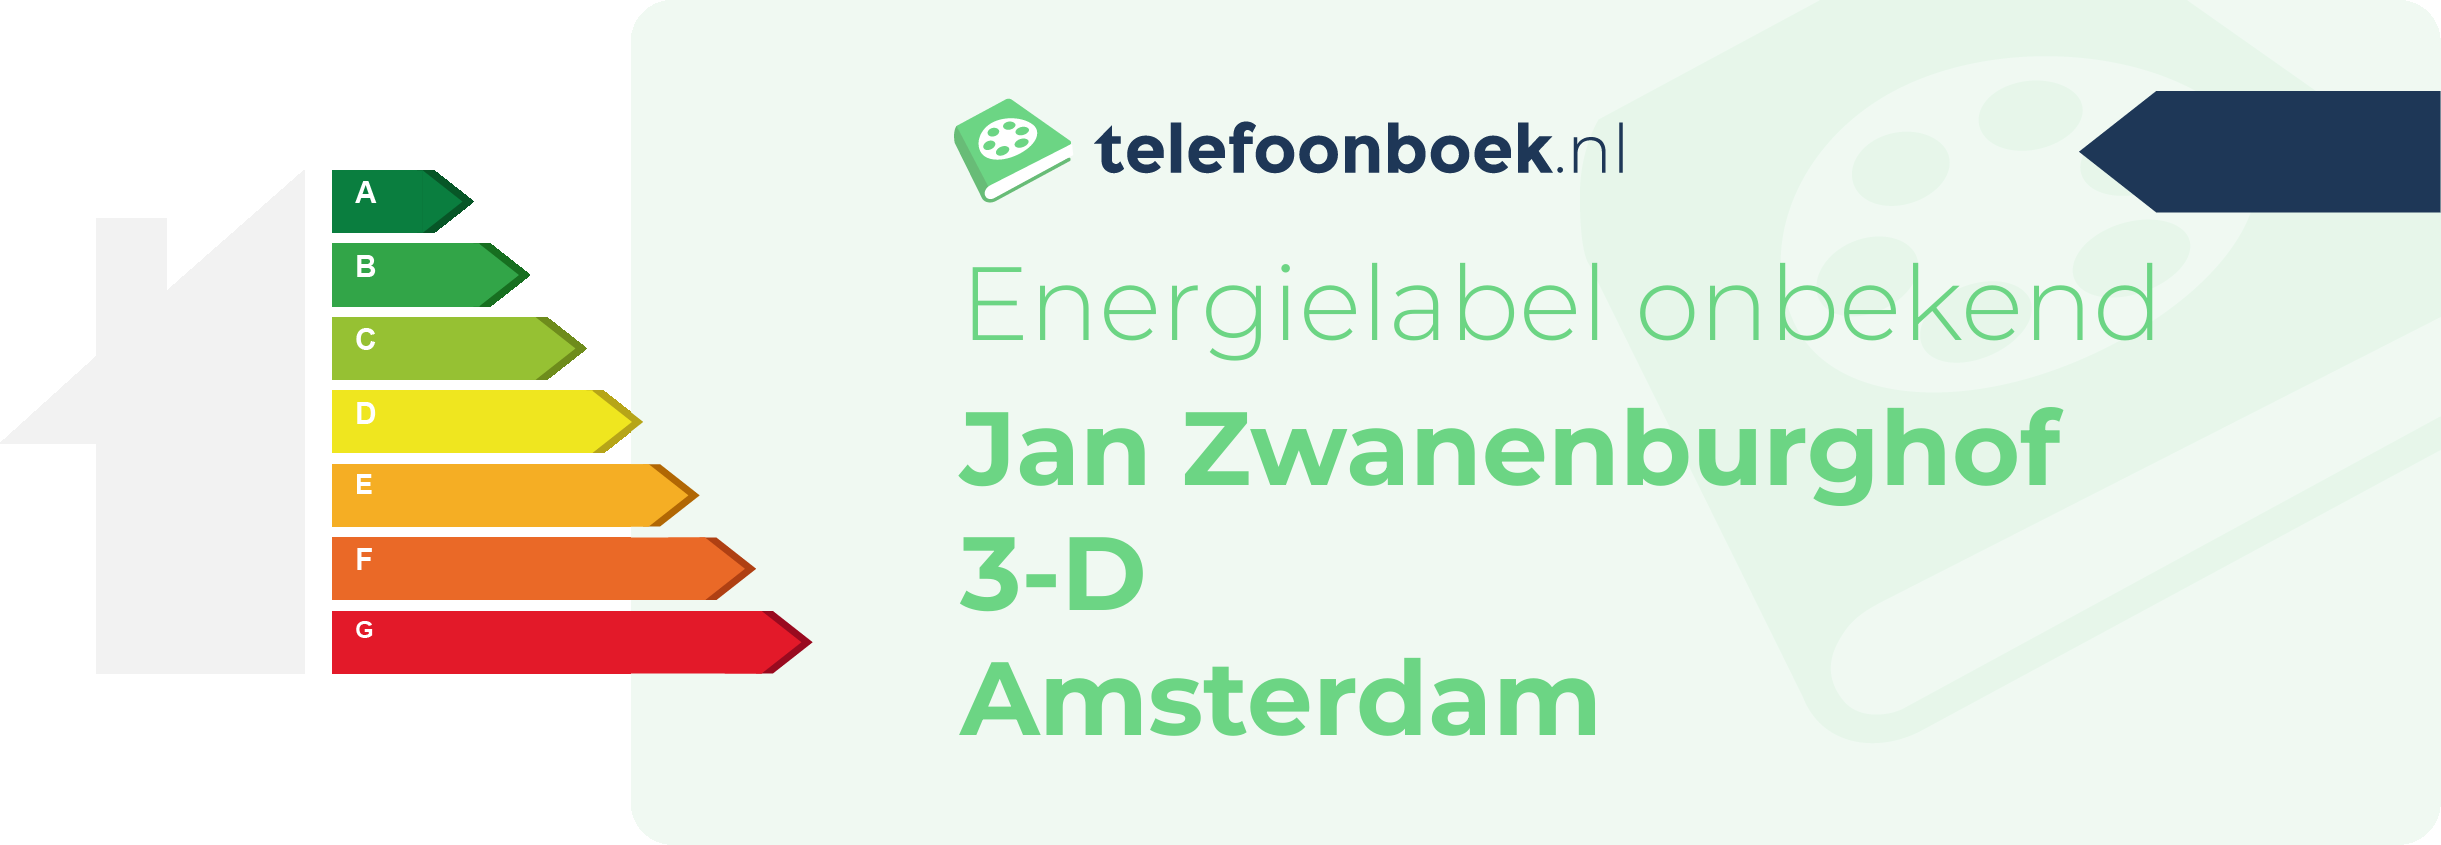 Energielabel Jan Zwanenburghof 3-D Amsterdam